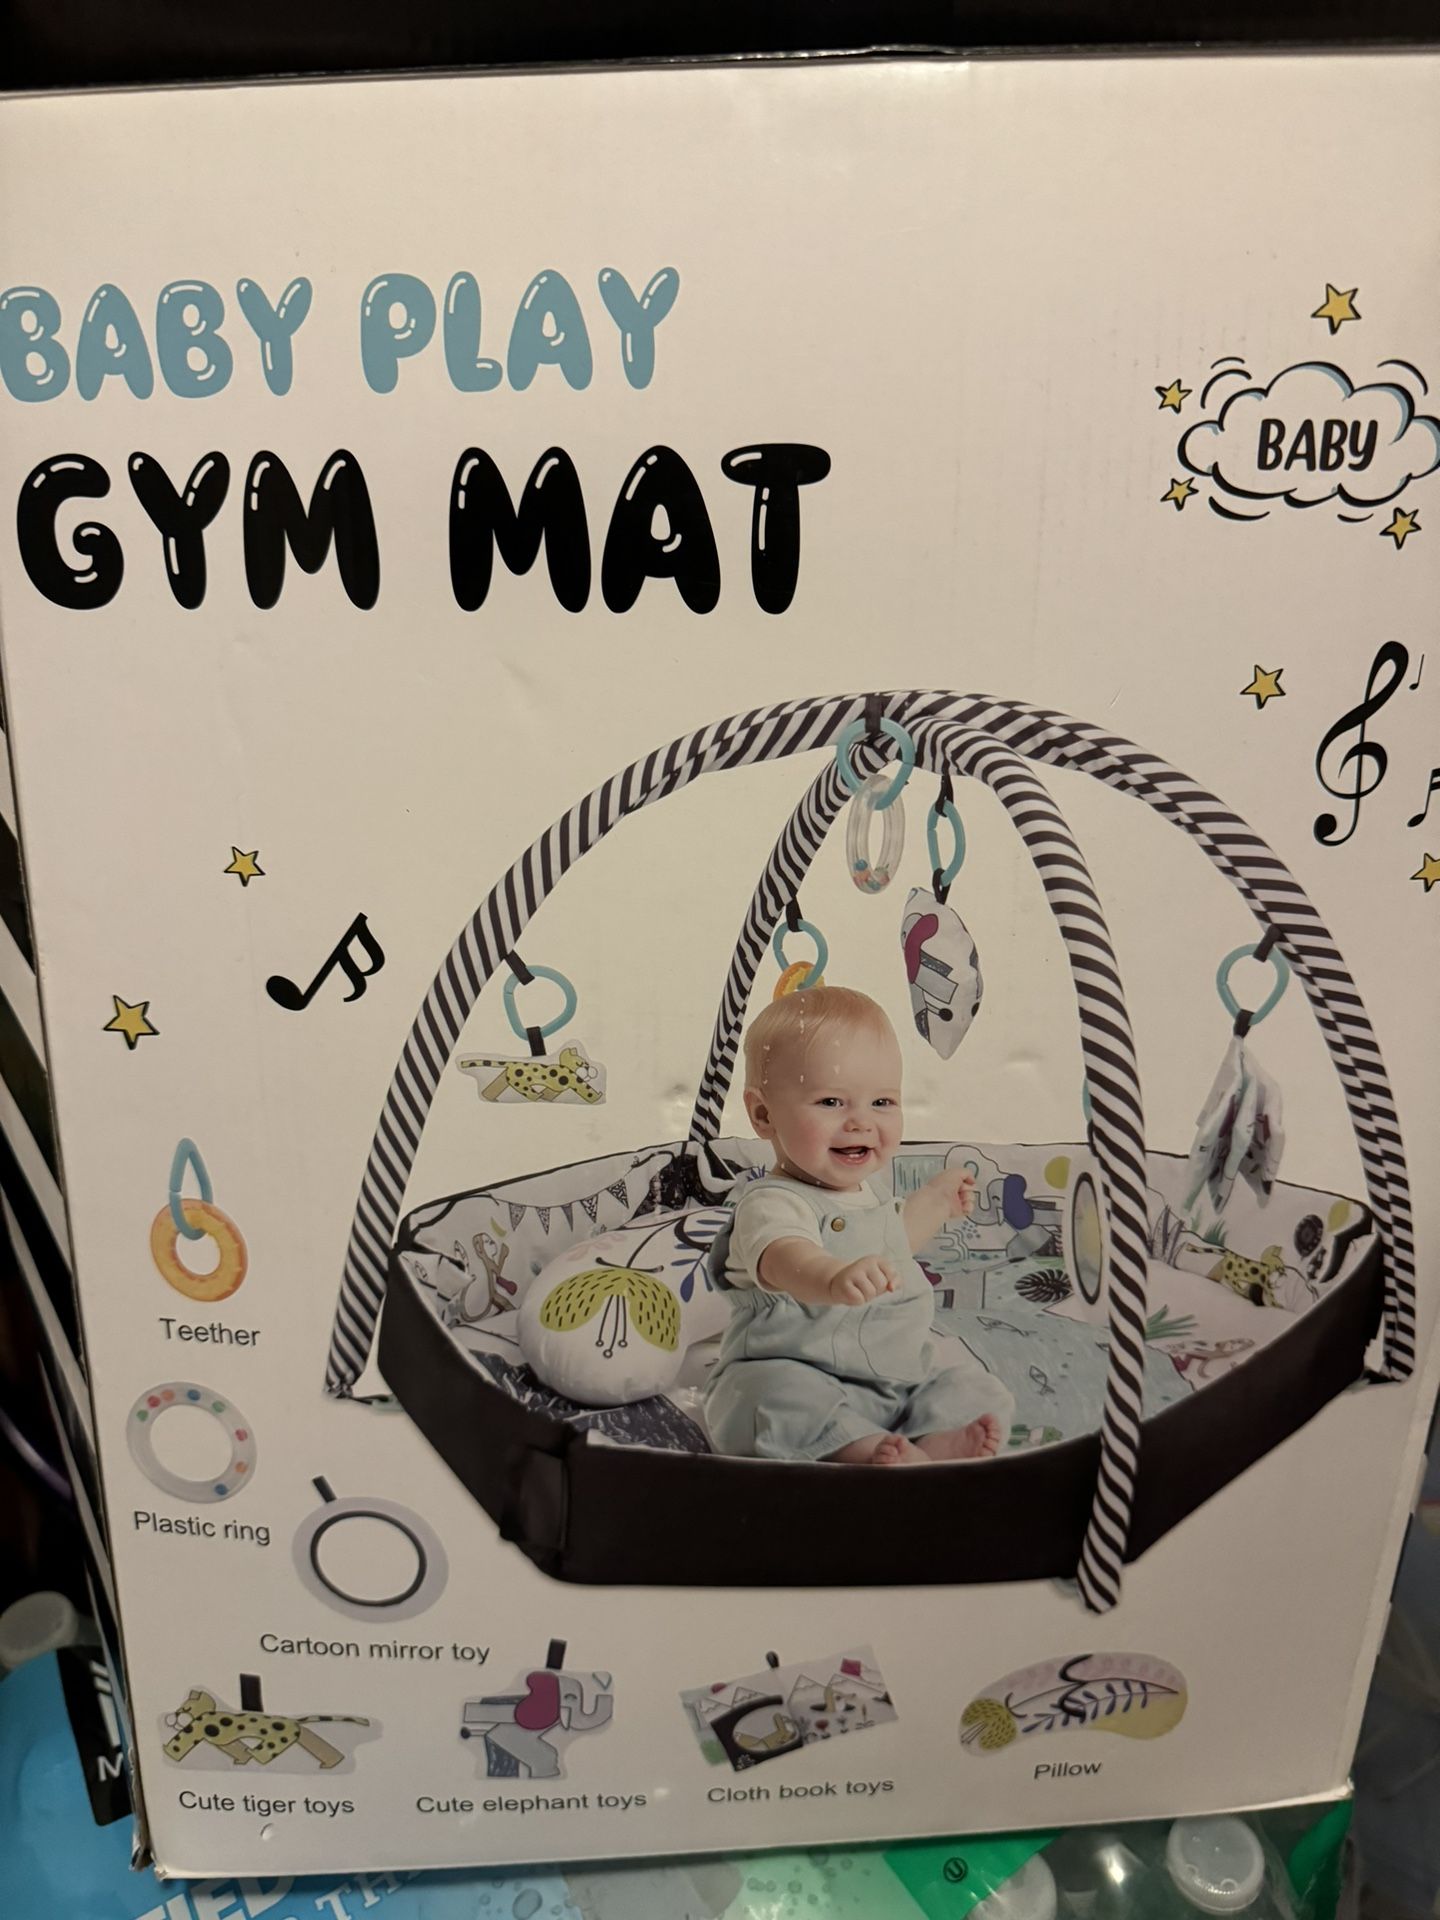 Baby play gym mat